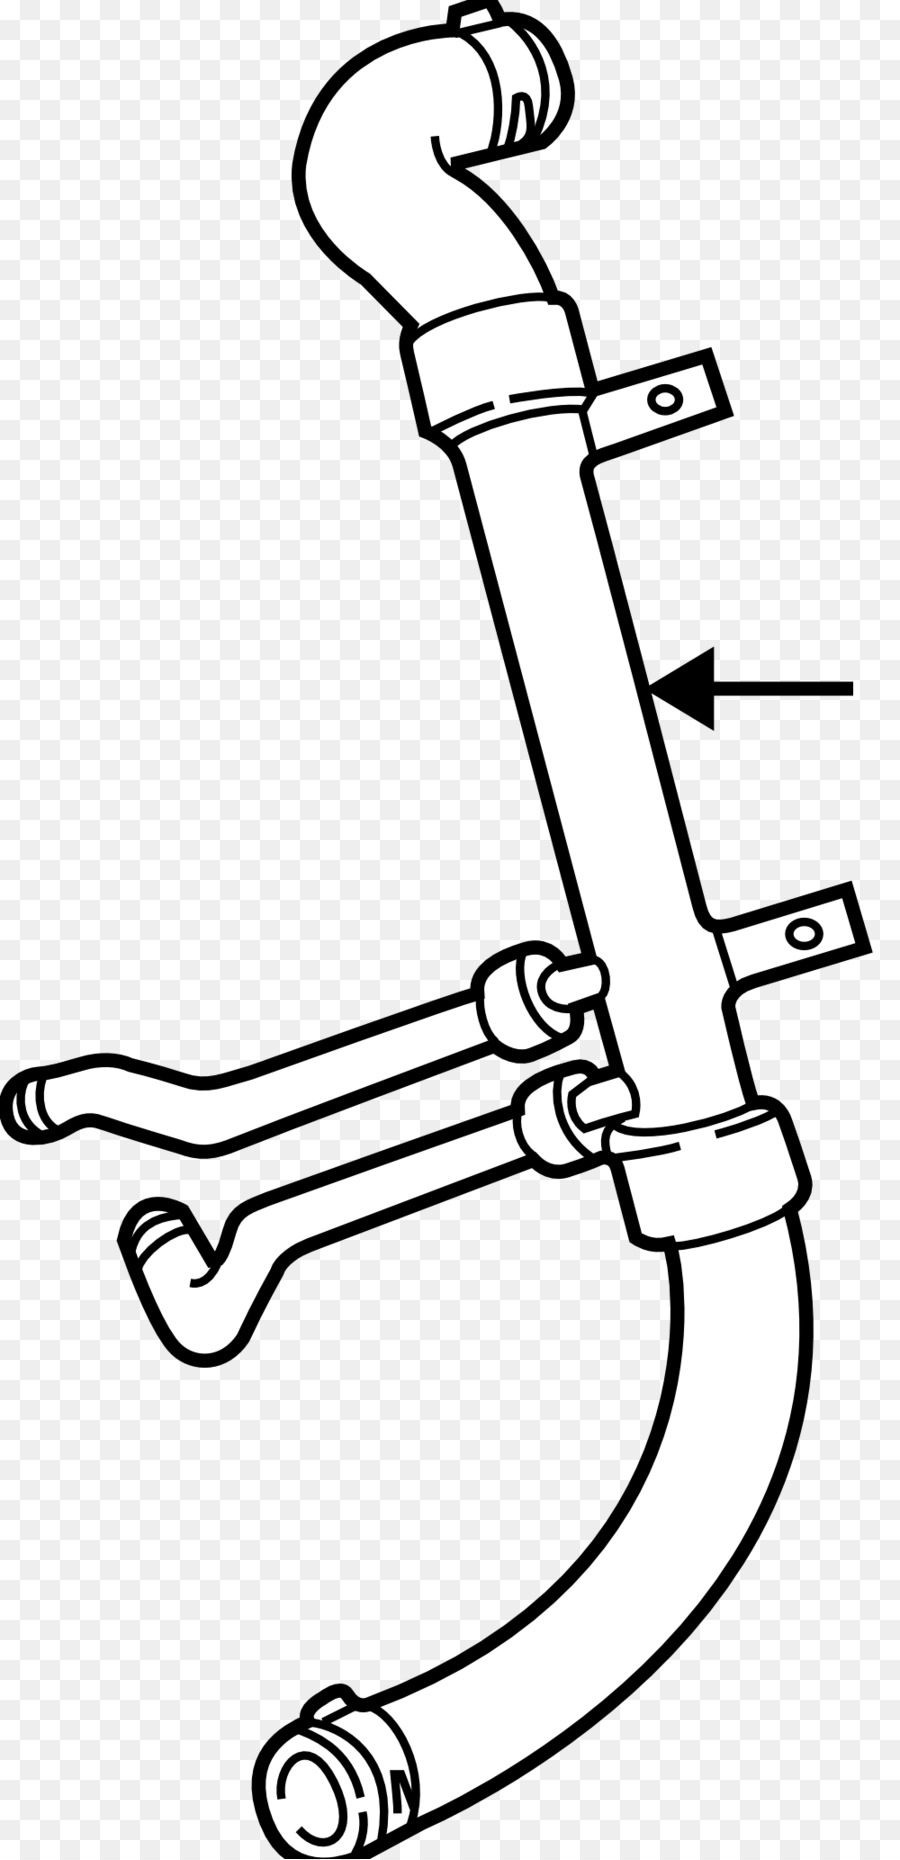 Clip art Schuh Freizeit-Finger-Winkel - Winkel